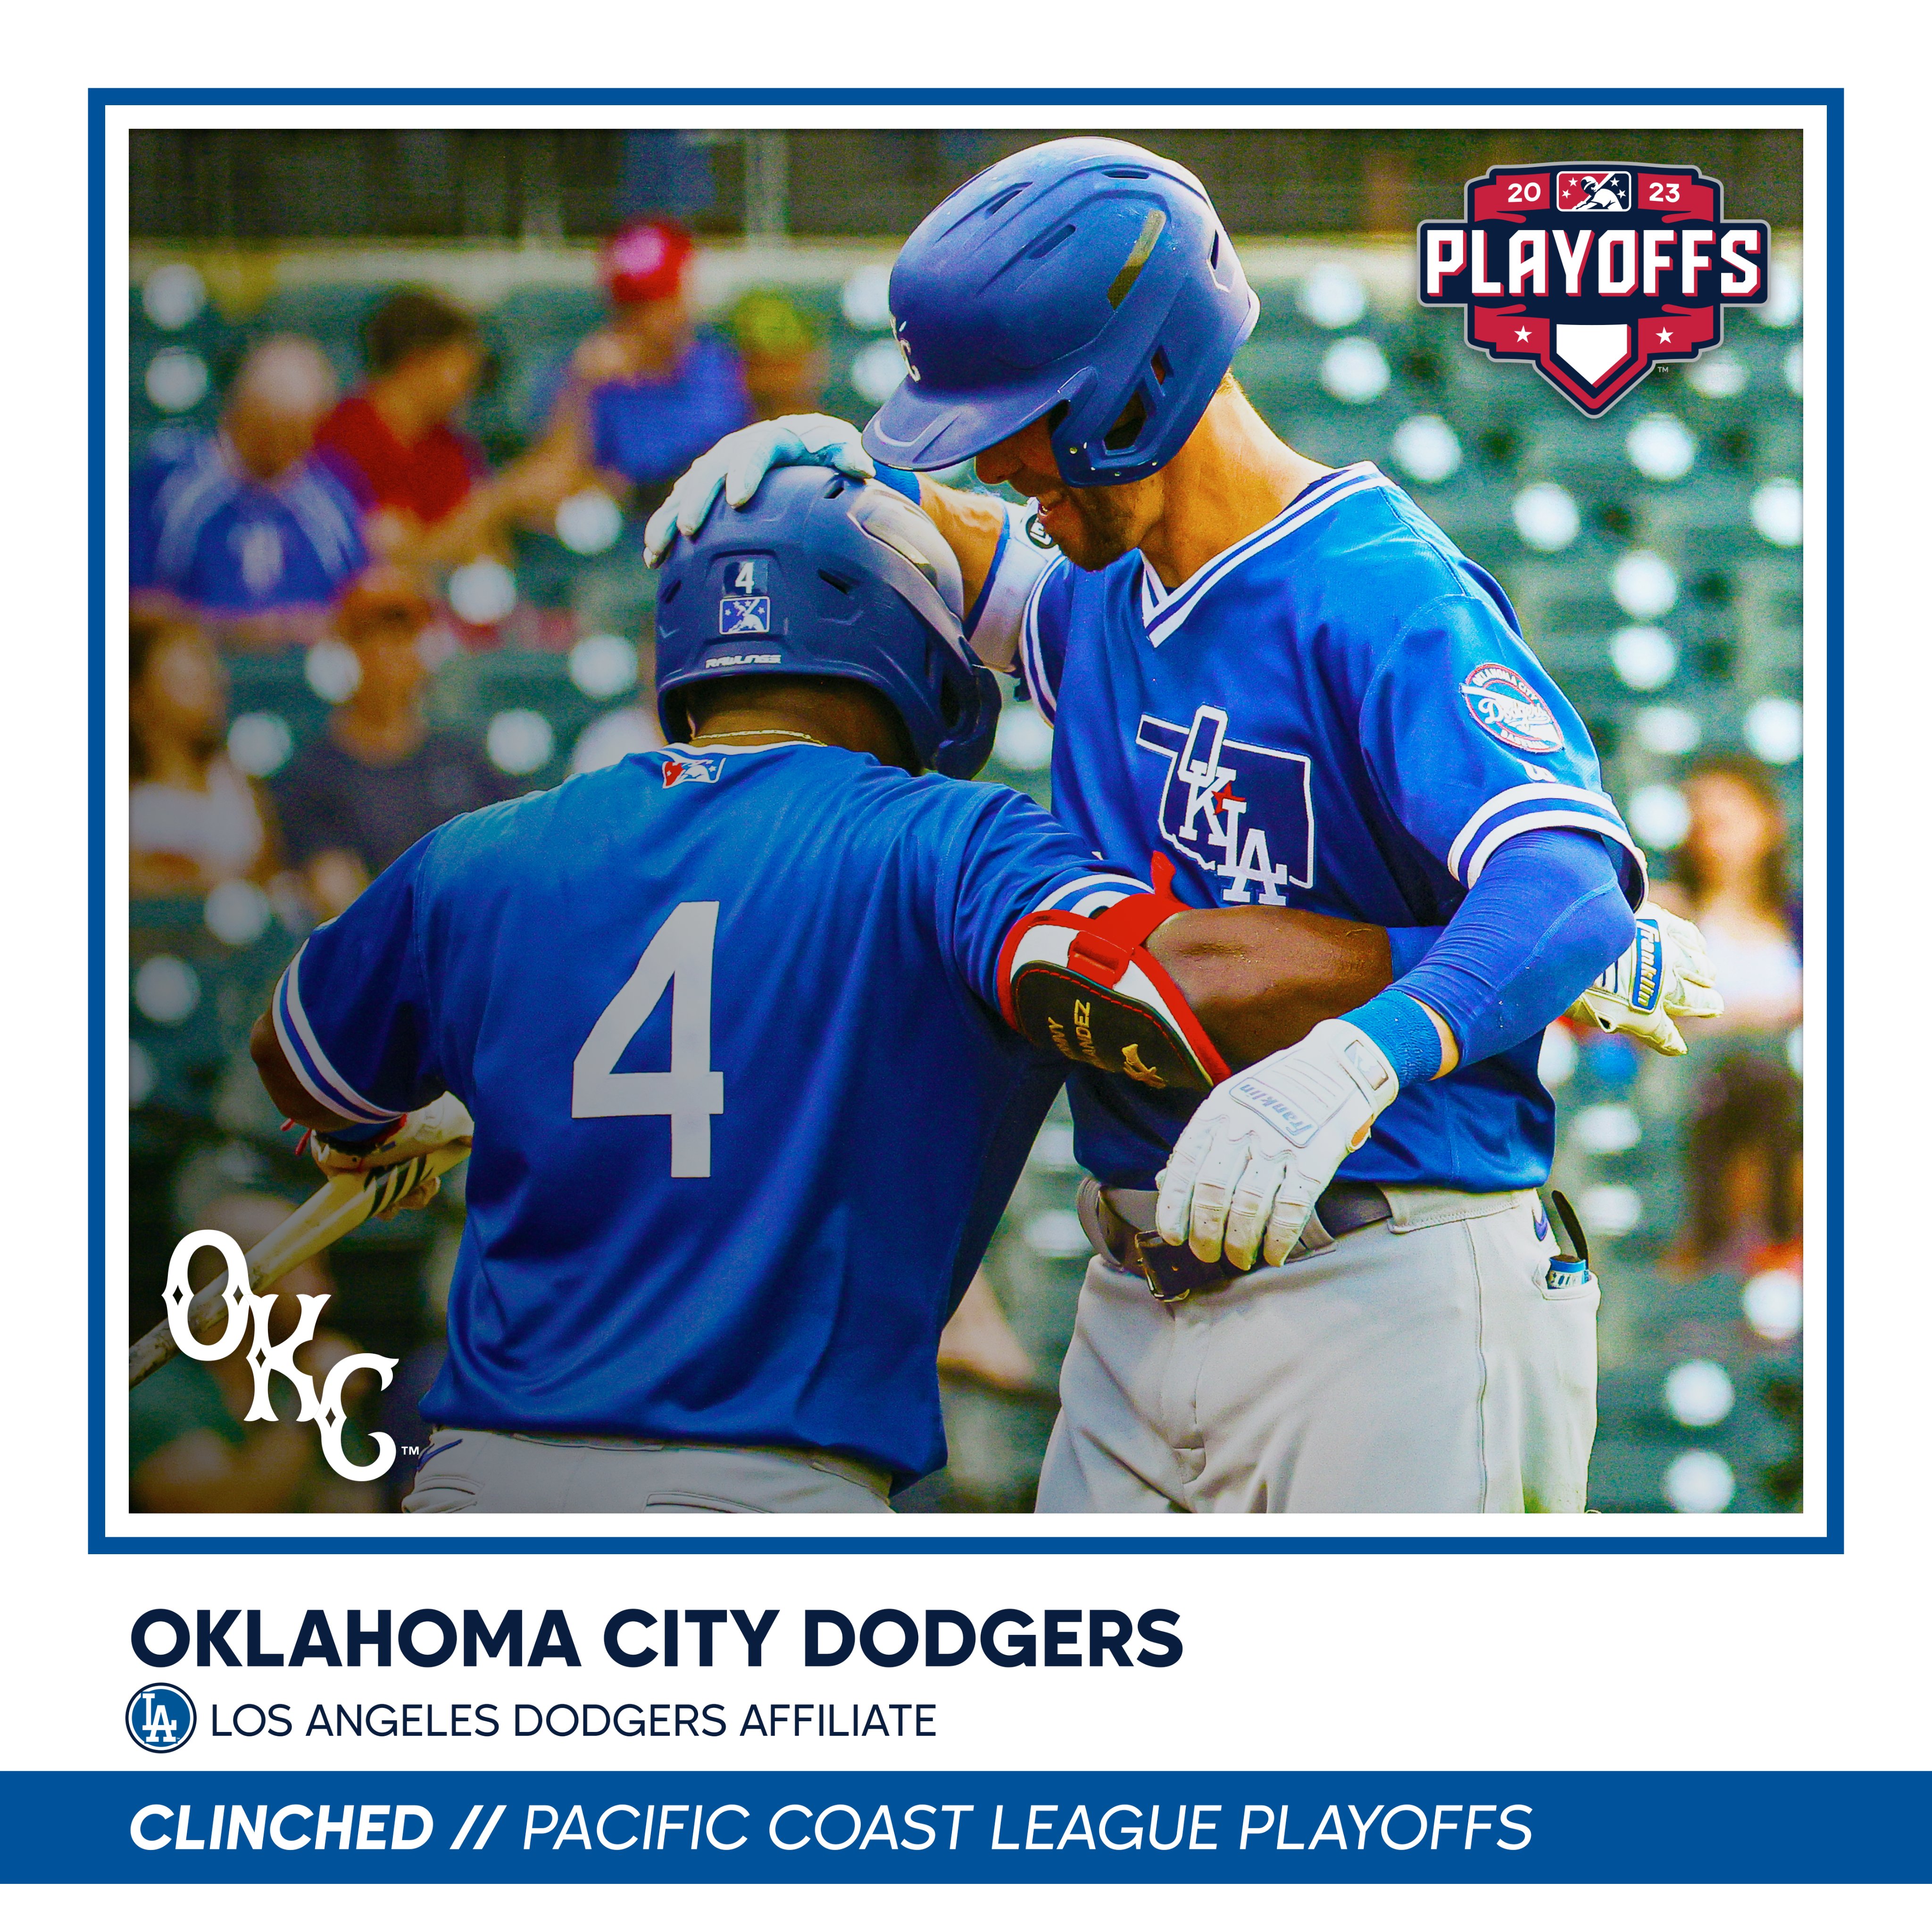 Minor League Baseball on X: The Oklahoma City Dodgers are your